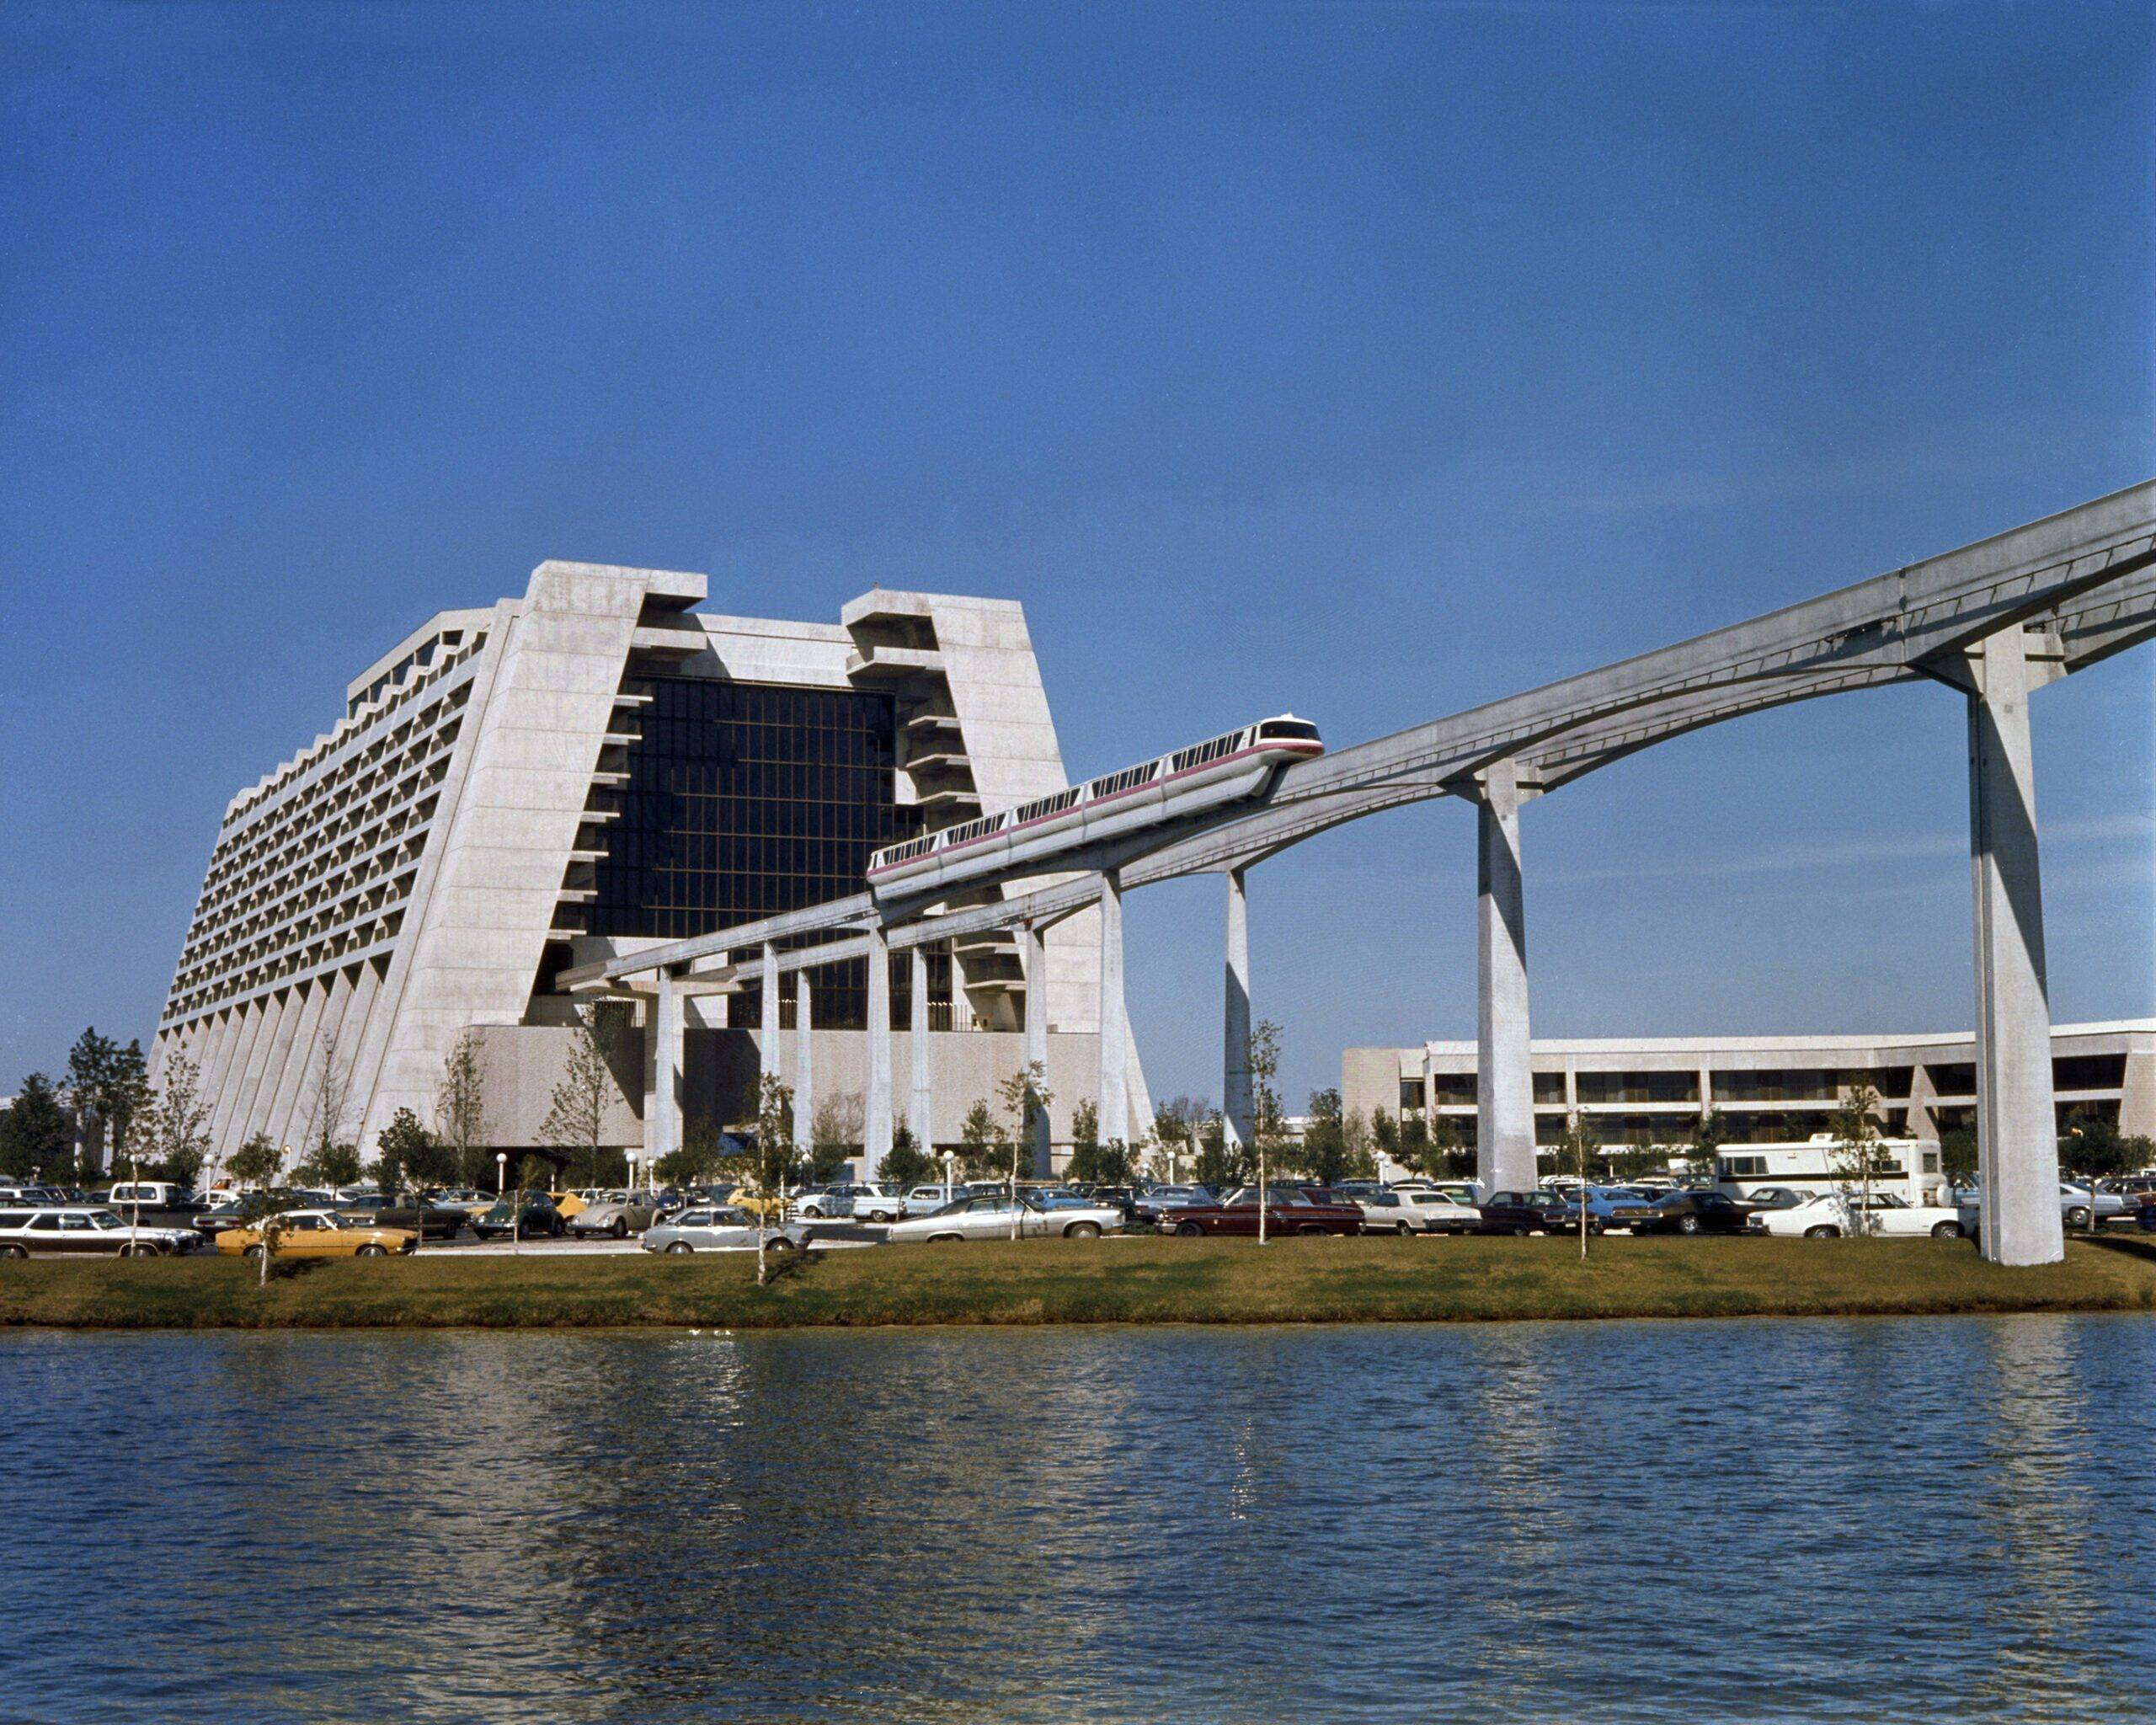 Disney’s Contemporary Resort and the Walt Disney World Monorail in 1975 at Walt Disney World Resort